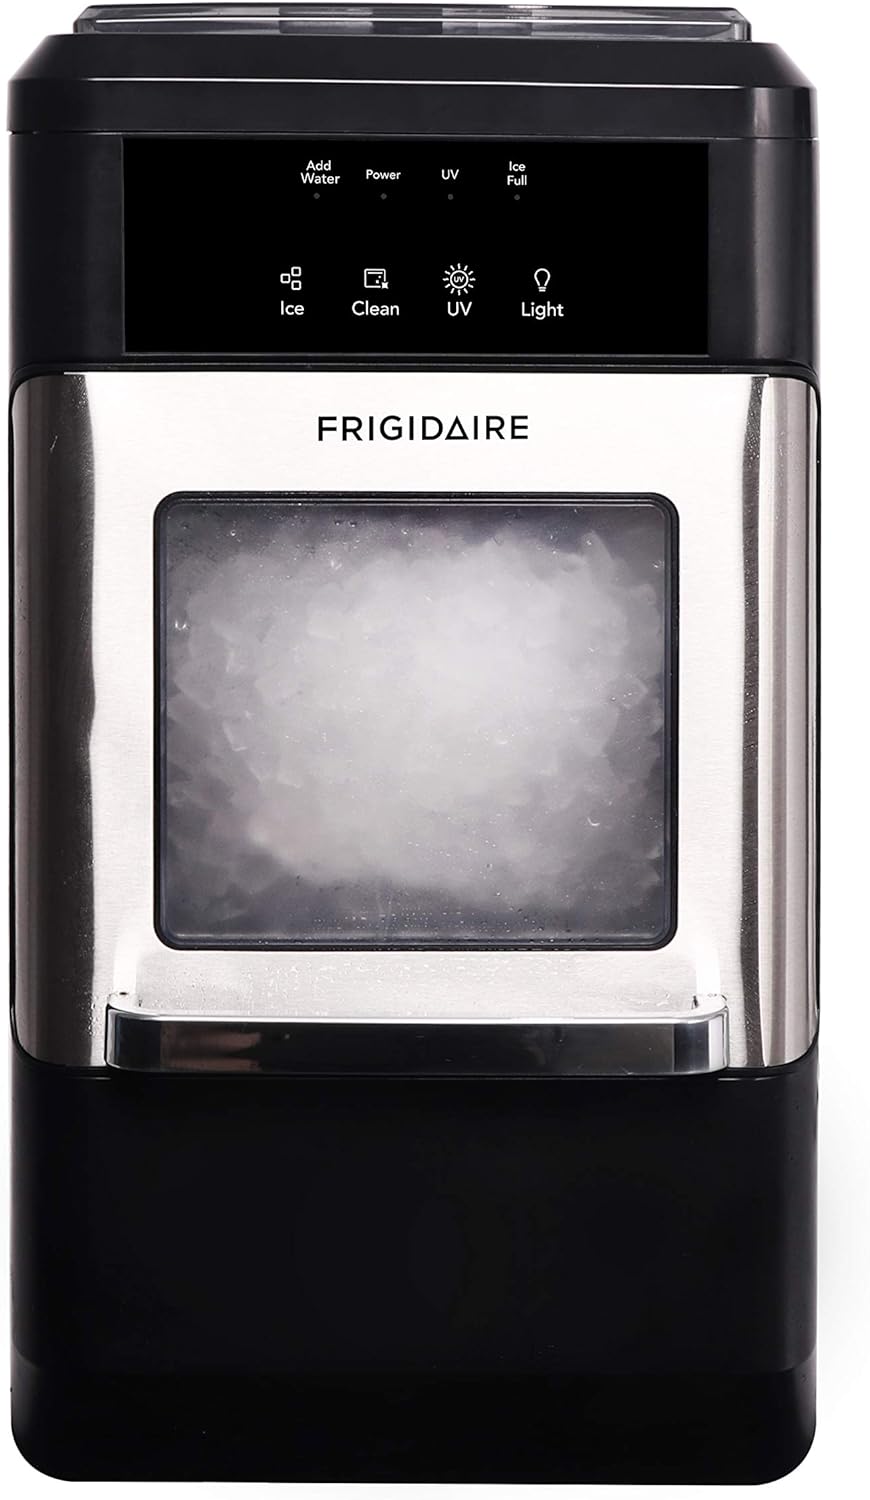 Frigidaire EFIC235-AMZ Countertop Crunchy Chewable Nugget Ice Maker